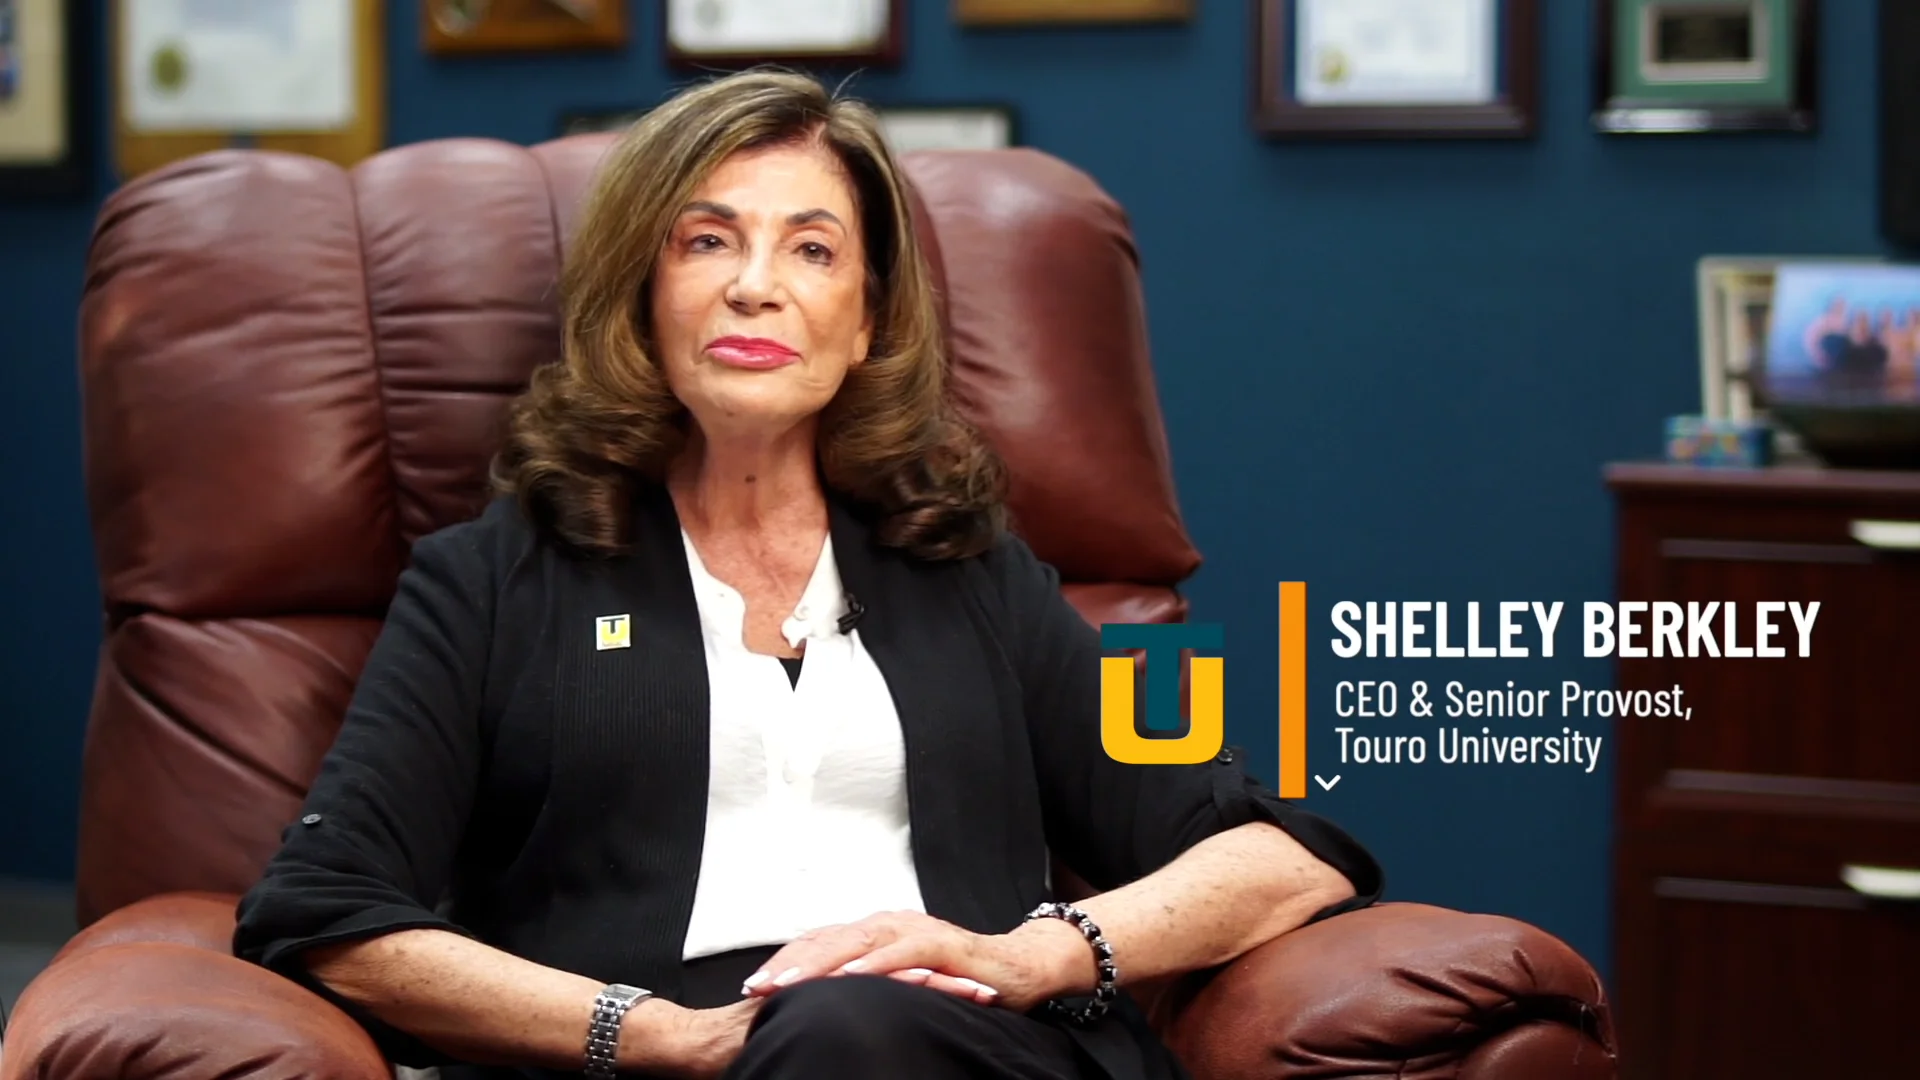 Shelley Berkley, Touro University - Henderson Testimonial.mp4 on Vimeo